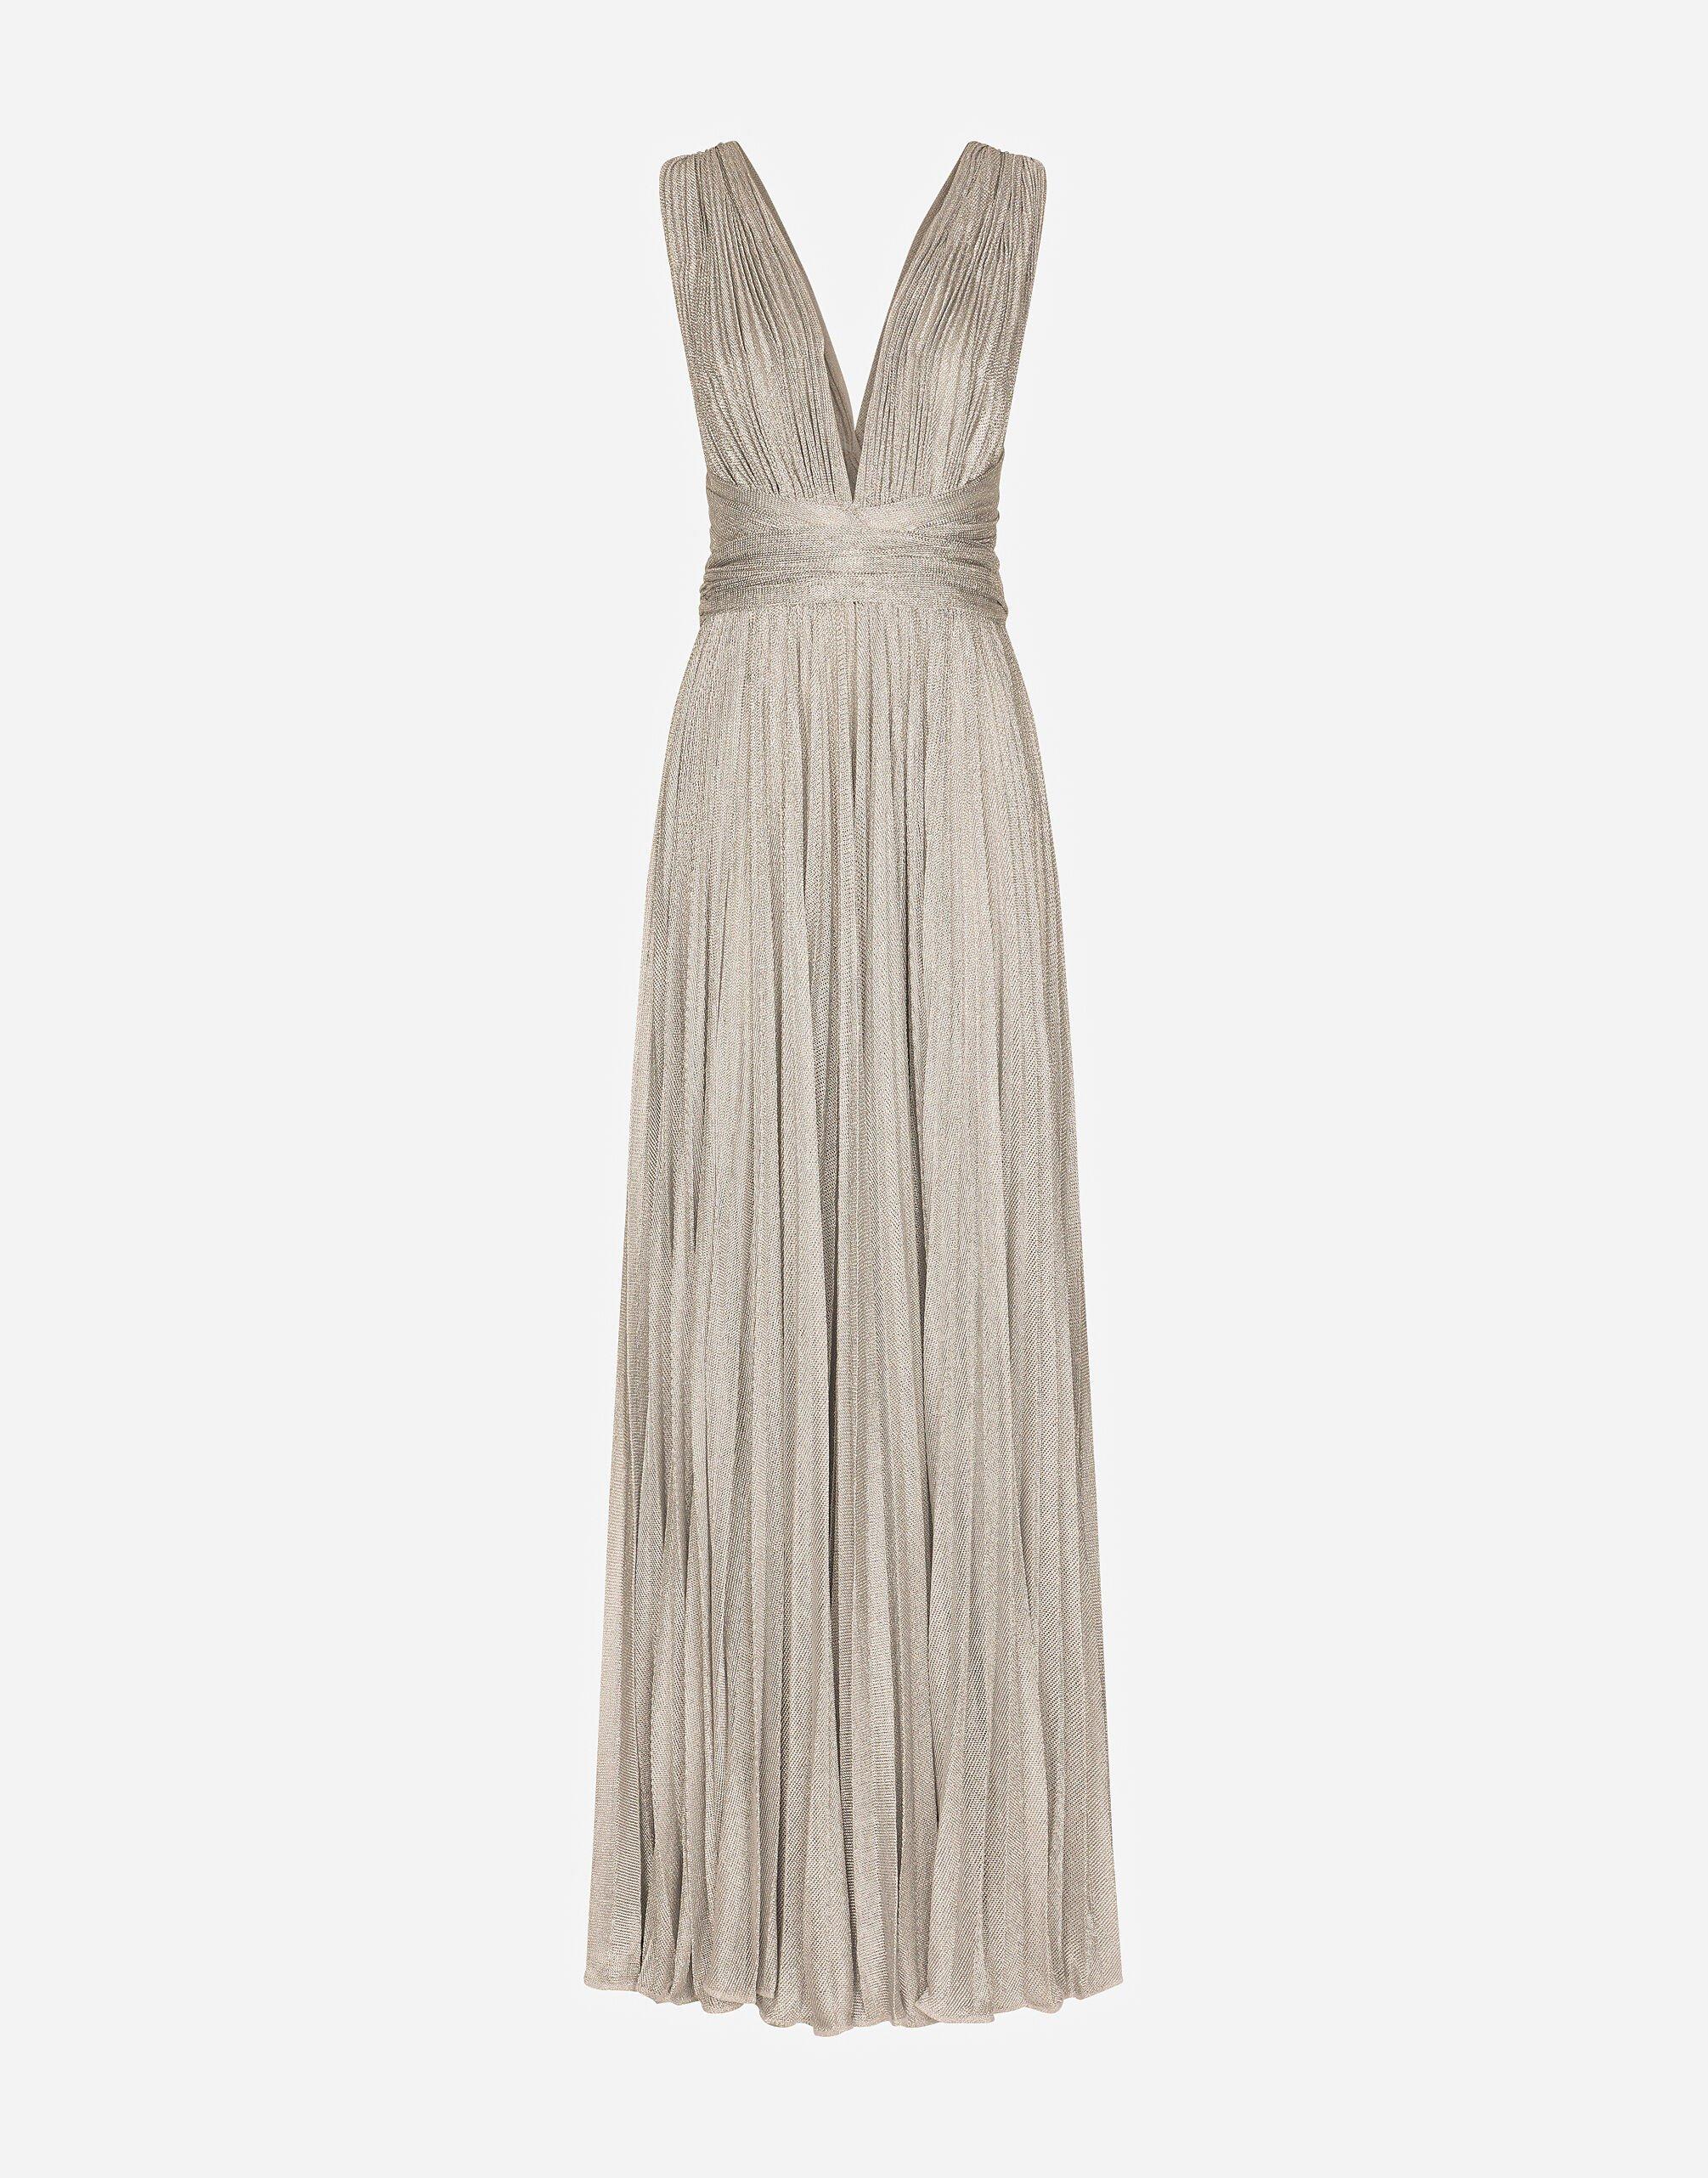 Dolce & Gabbana Long Lamé Knit Dress in Metallic | Lyst